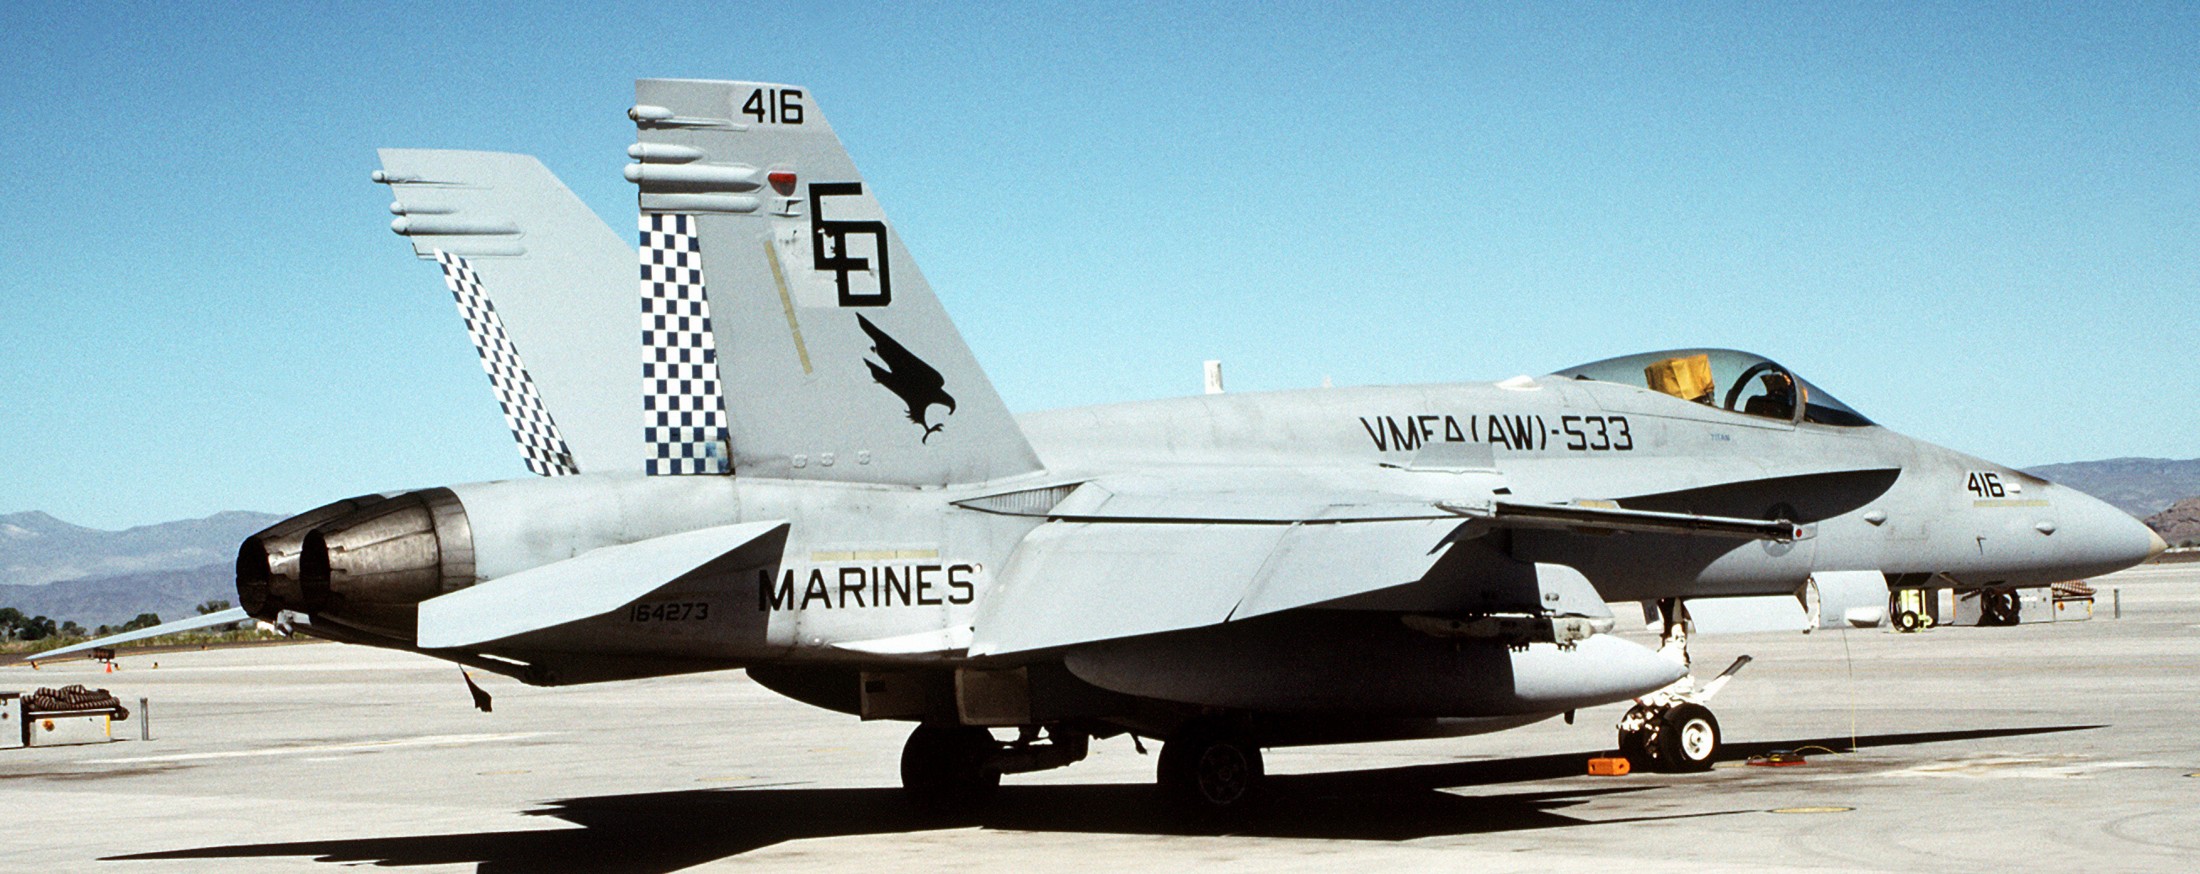 vmfa(aw)-533 hawks marine fighter attack squadron usmc f/a-18d hornet 92